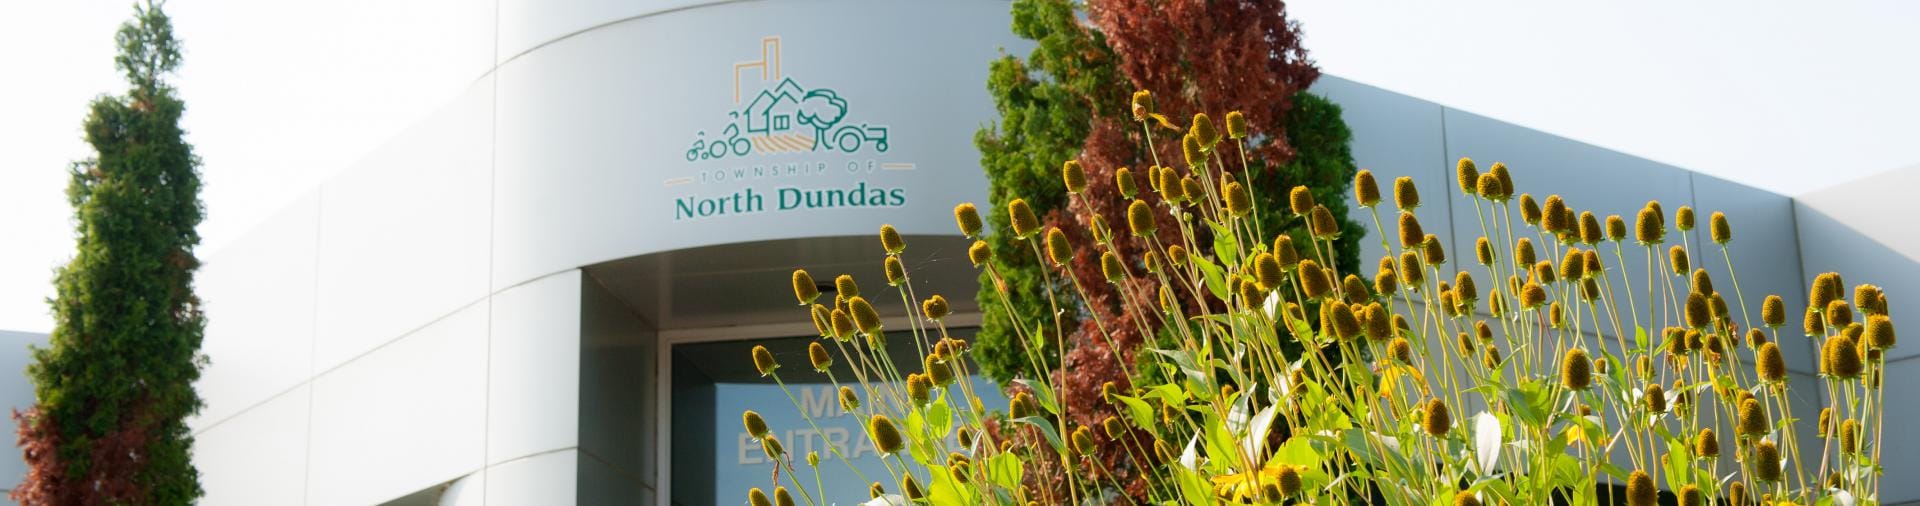 Township of North Dundas Office